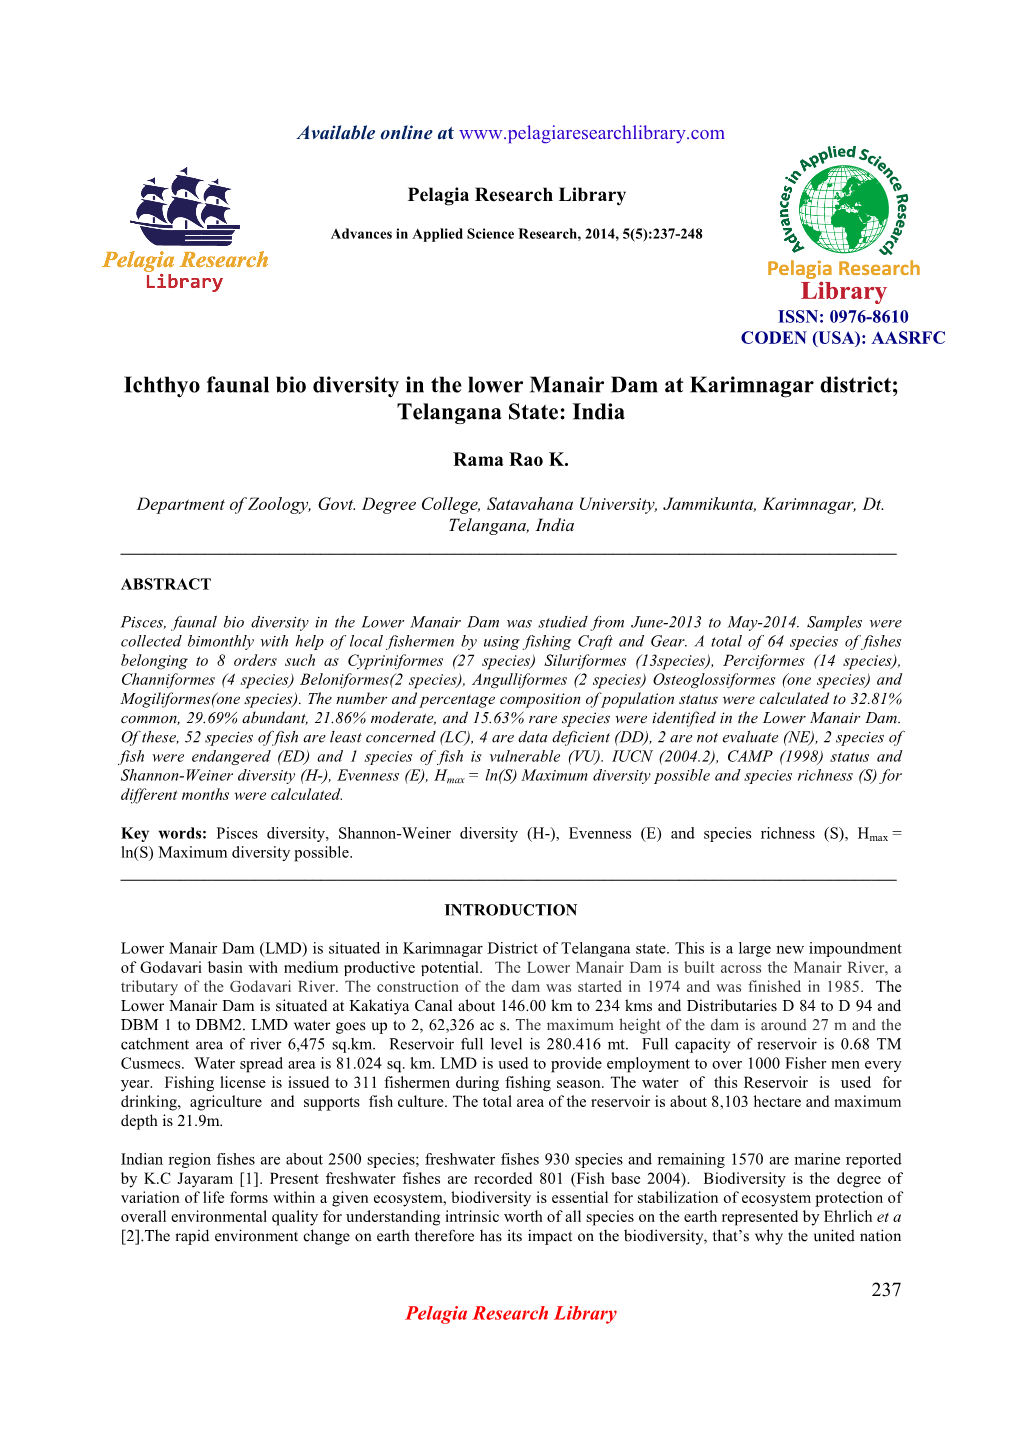 Ichthyo Faunal Bio Diversity in the Lower Manair Dam at Karimnagar District; Telangana State: India